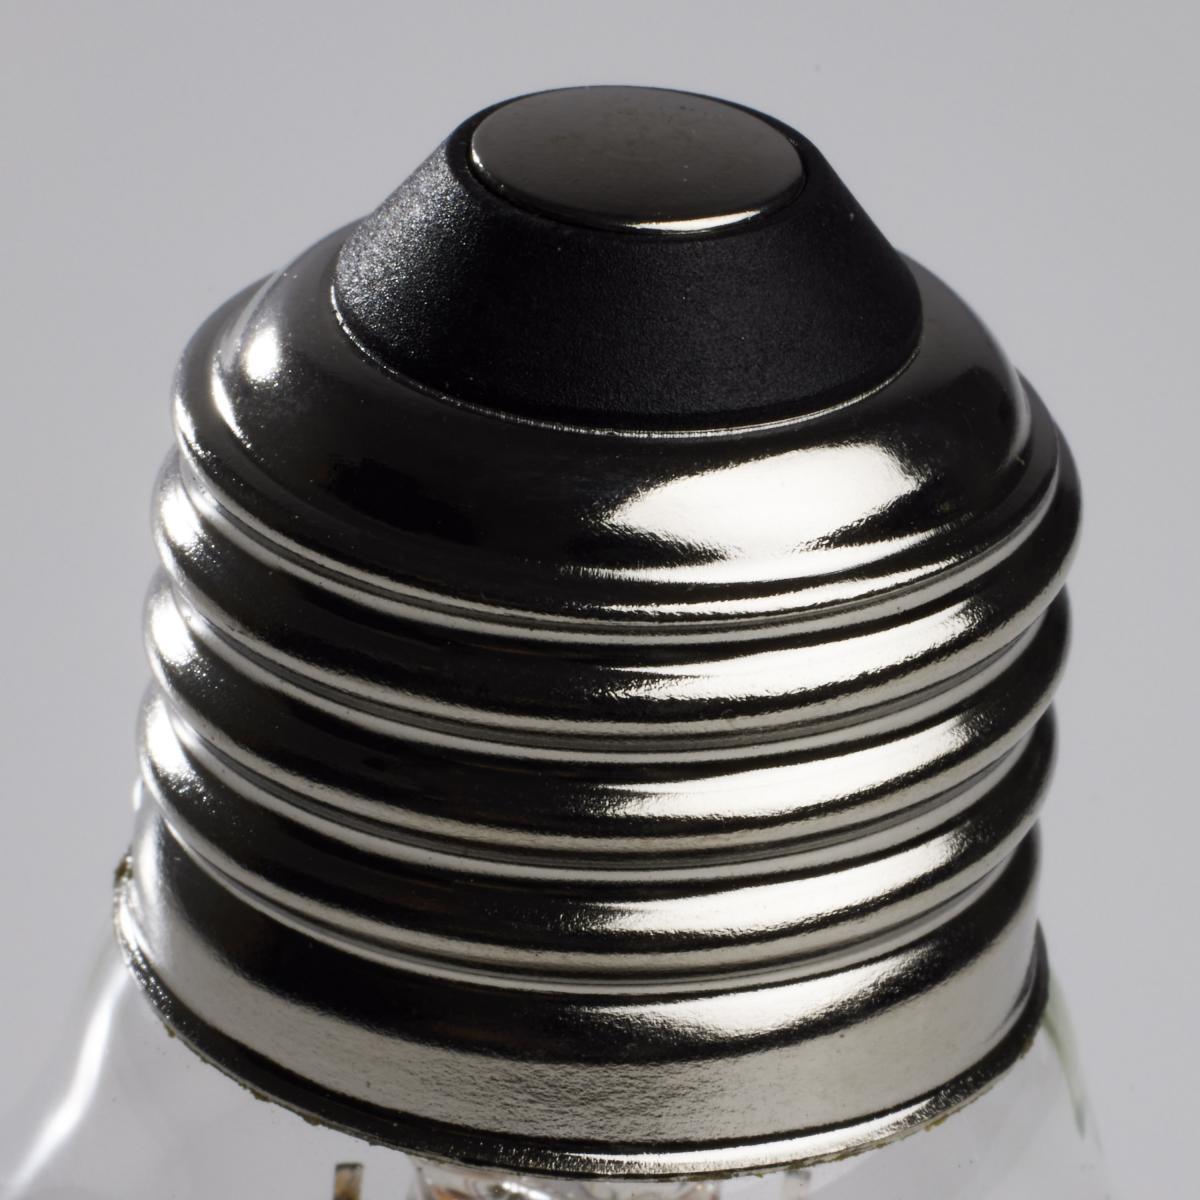 G25 Filament LED Globe Bulb, 6 Watt, 500 Lumens, 2700K, E26 Medium Base, Clear Finish, Pack Of 2